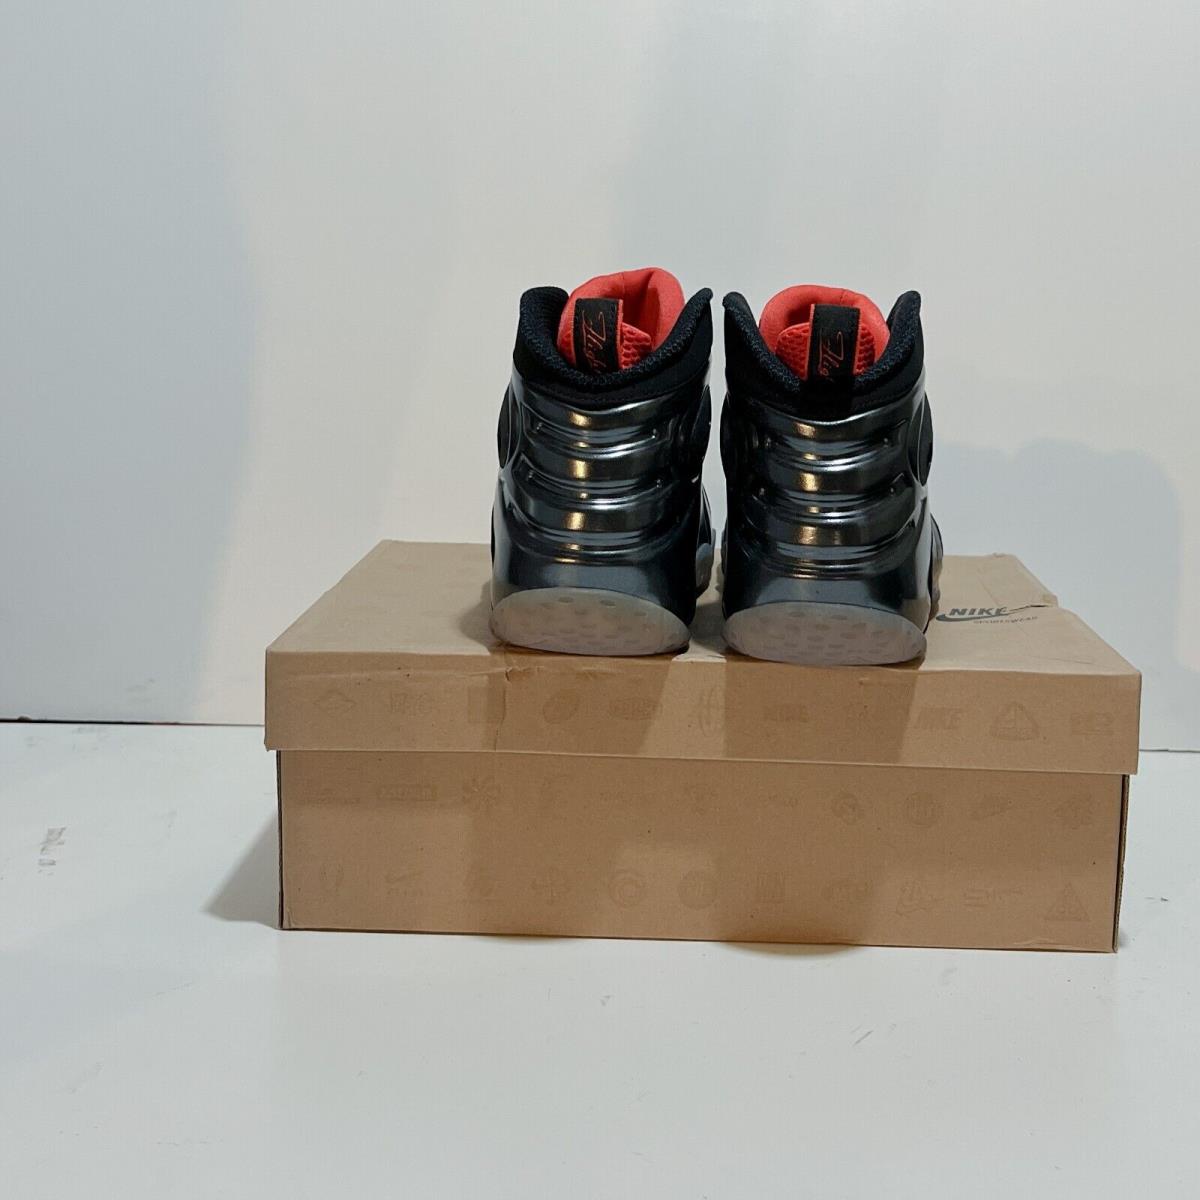 Nike shoes  - Black 1